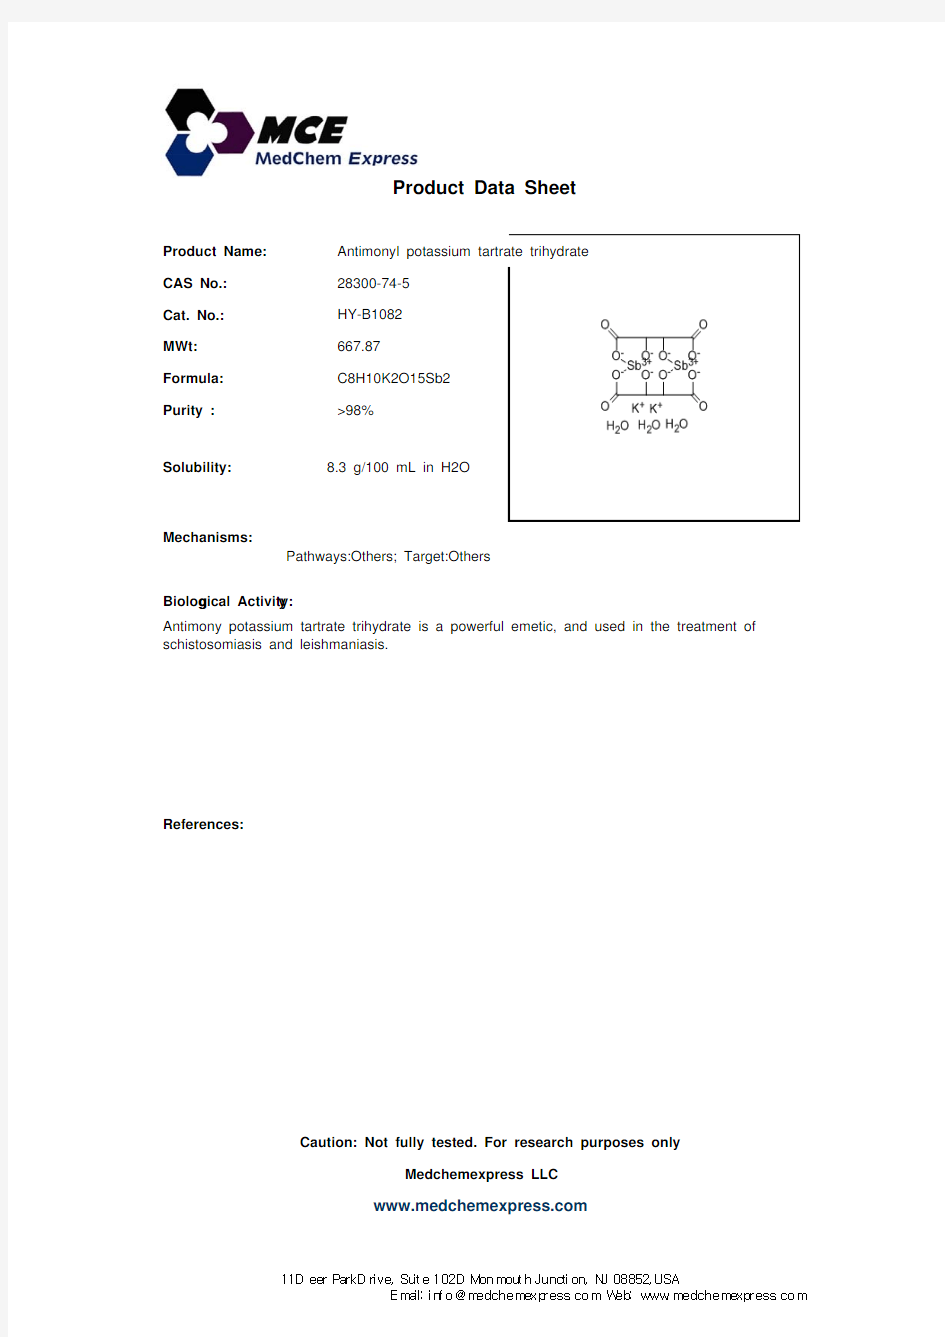 Antimonyl potassium tartrate trihydrate_28300-74-5_DataSheet_MedChemExpress